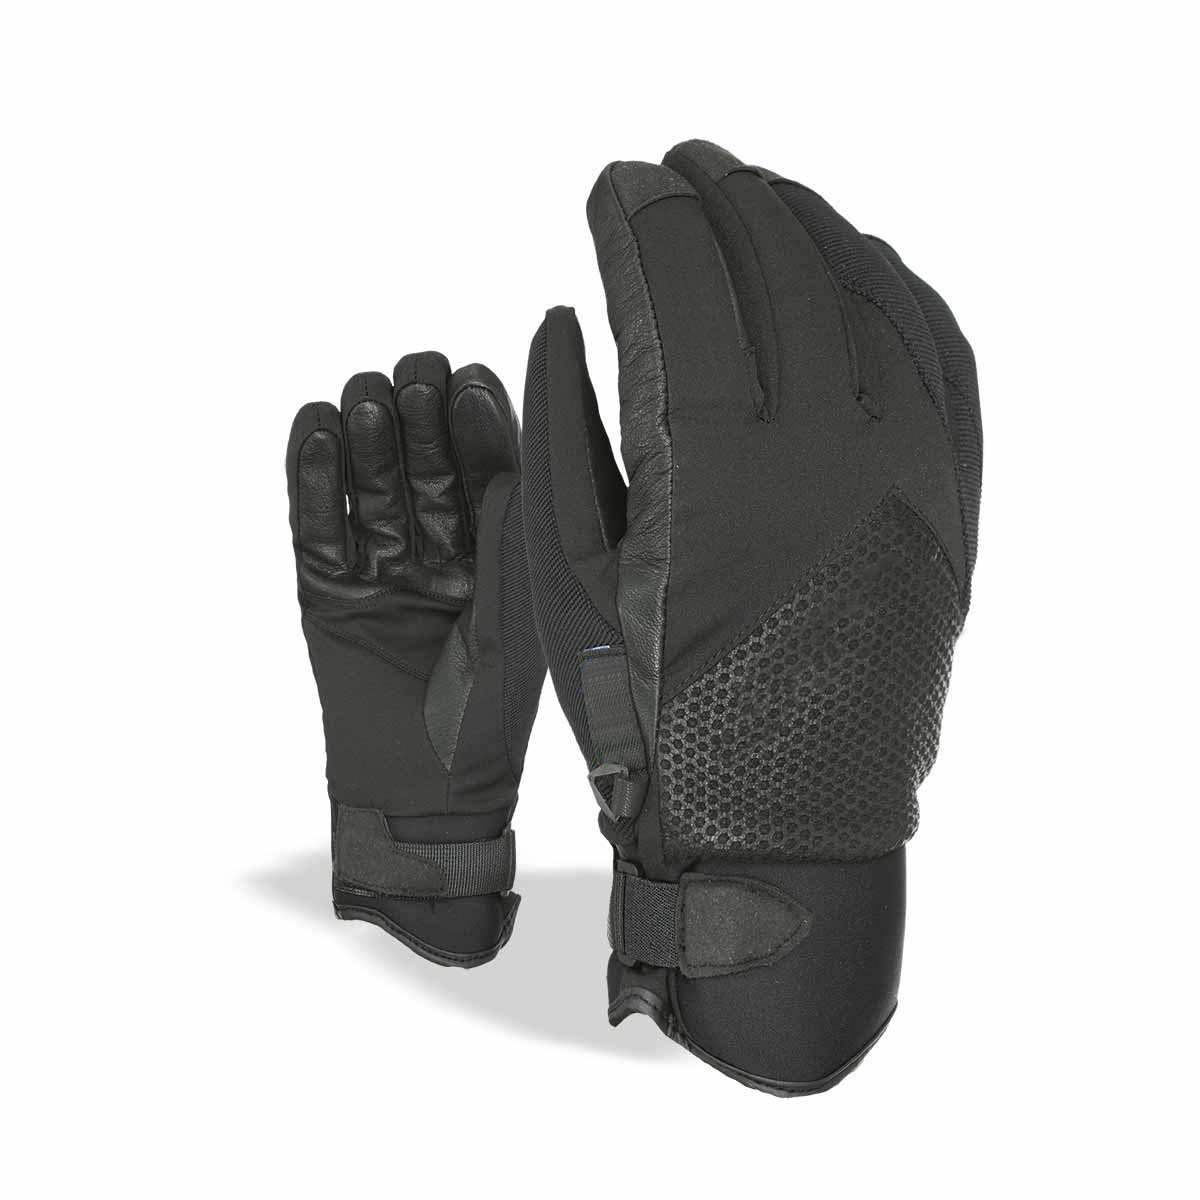 Insulated water&windproof warm winter ski gloves